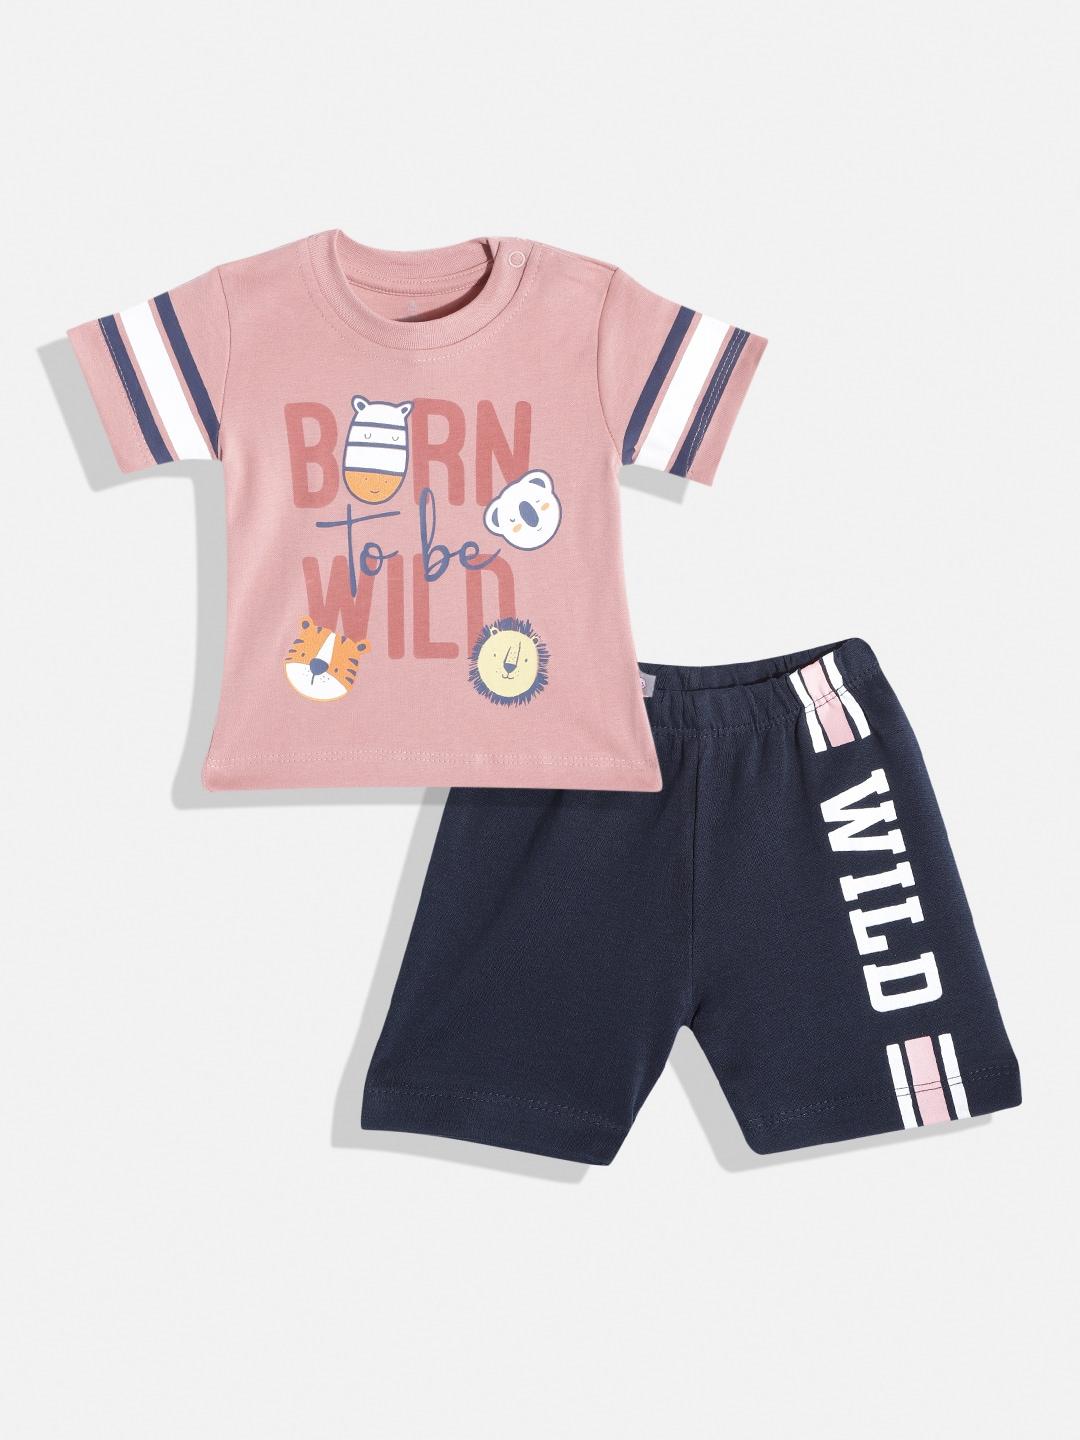 TINYO Infant Boys Peach-Coloured & Navy Blue Graphic Print Cotton Clothing Set